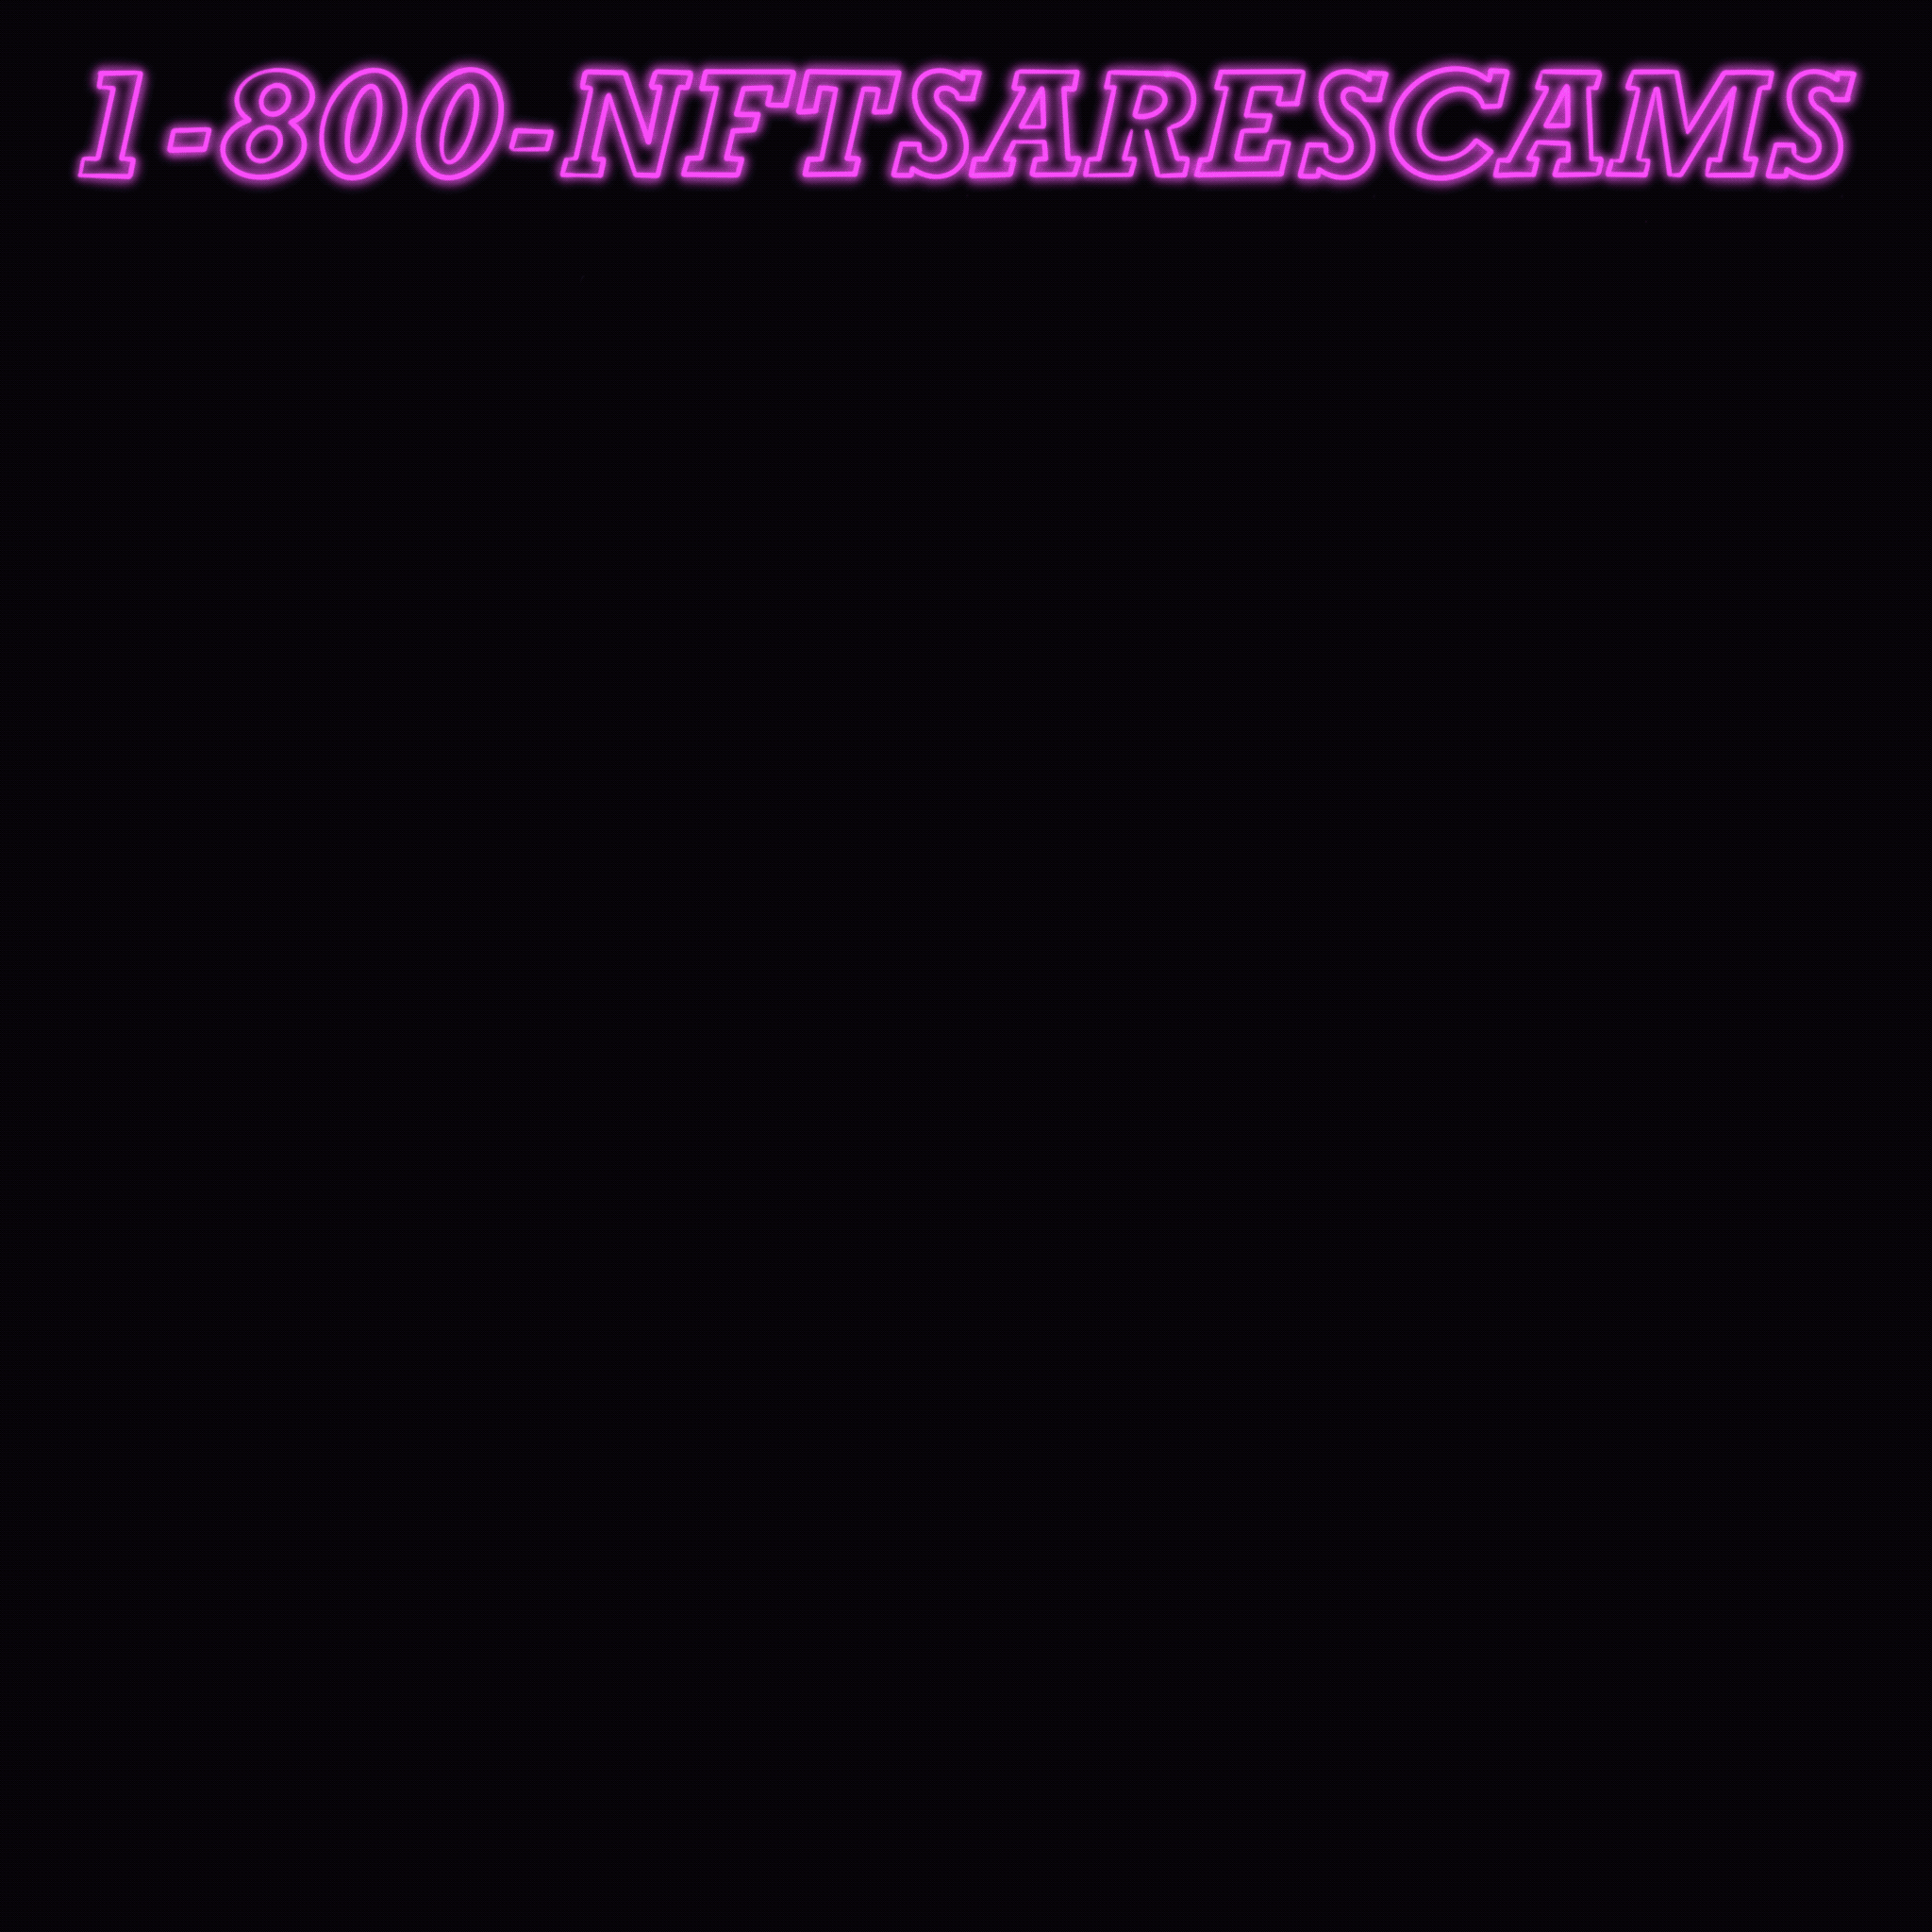 1-800-NFTSARESCAMS